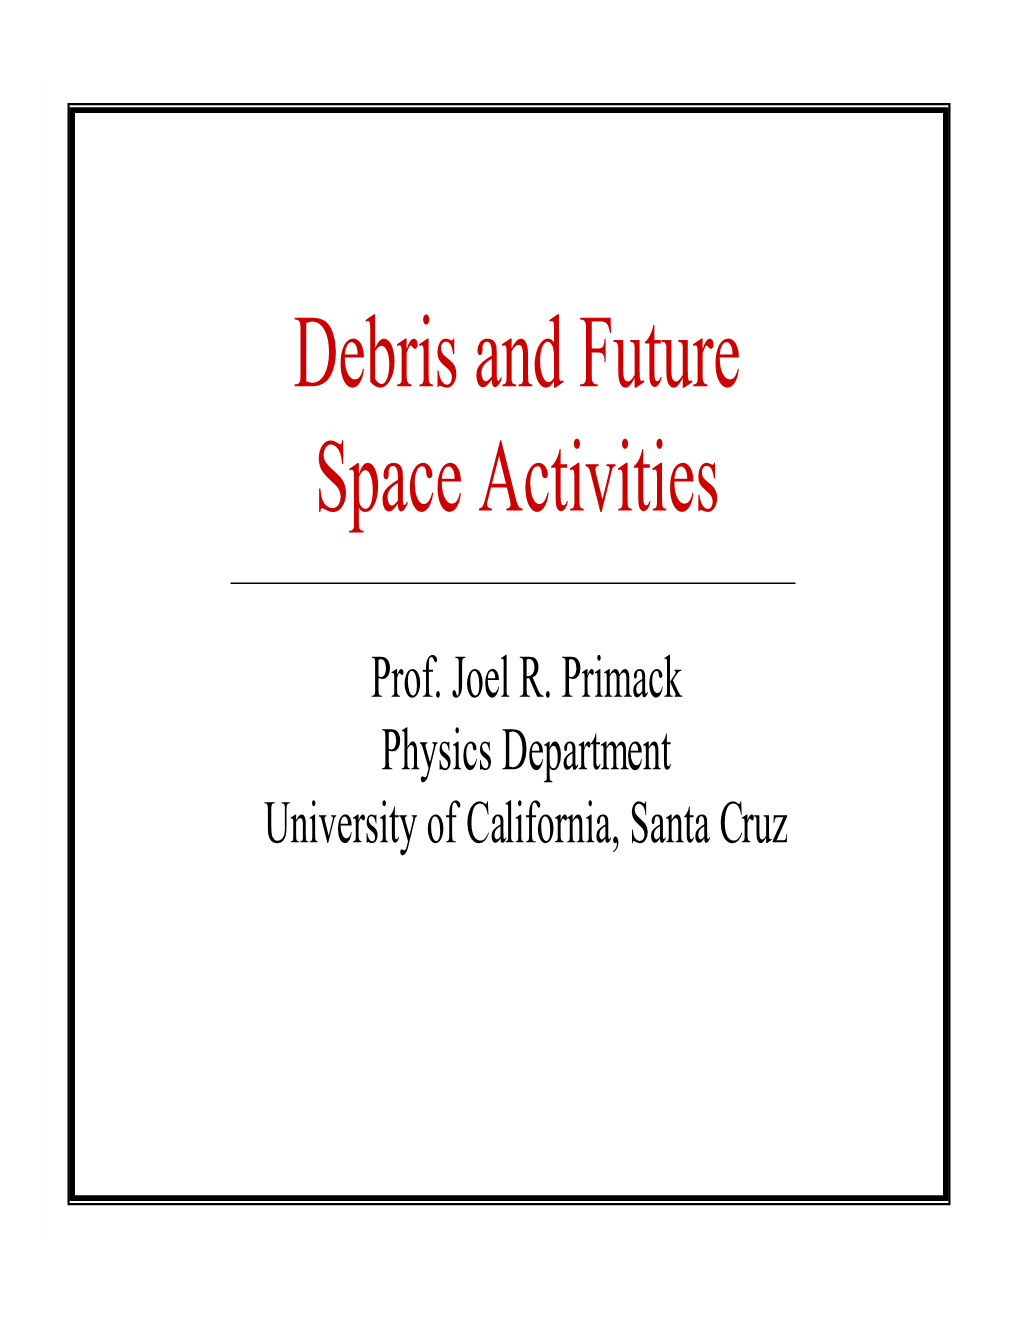 Debris and Future Space Activities